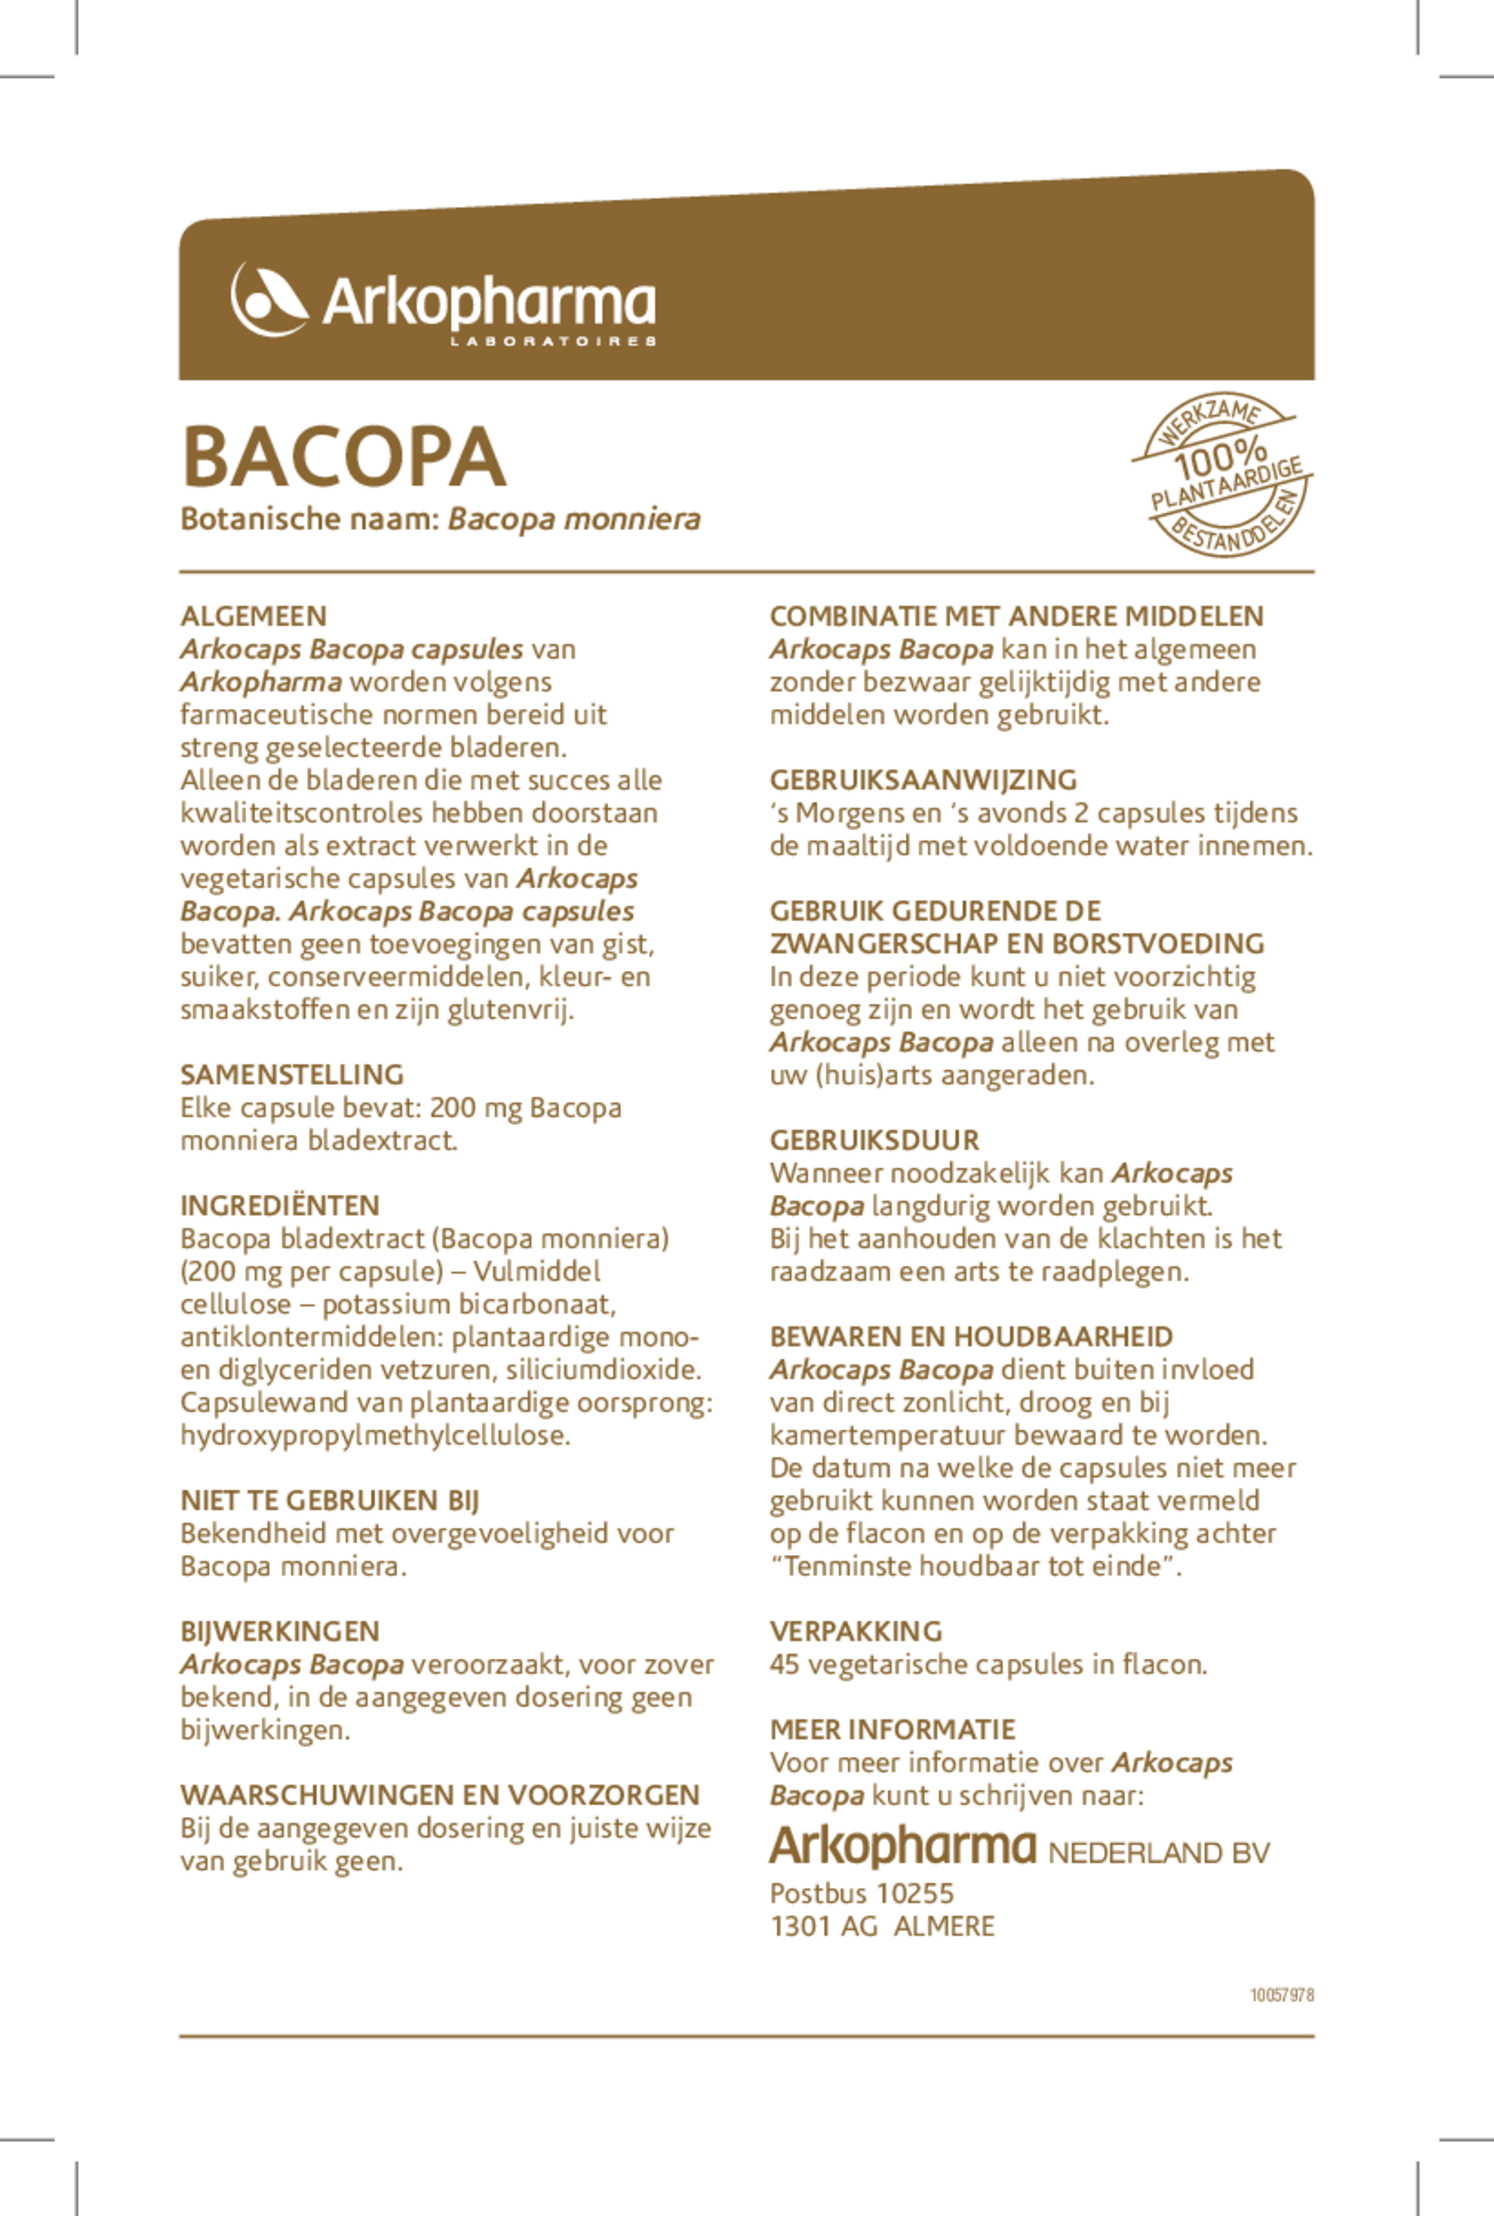 Bacopa Capsules afbeelding van document #1, gebruiksaanwijzing